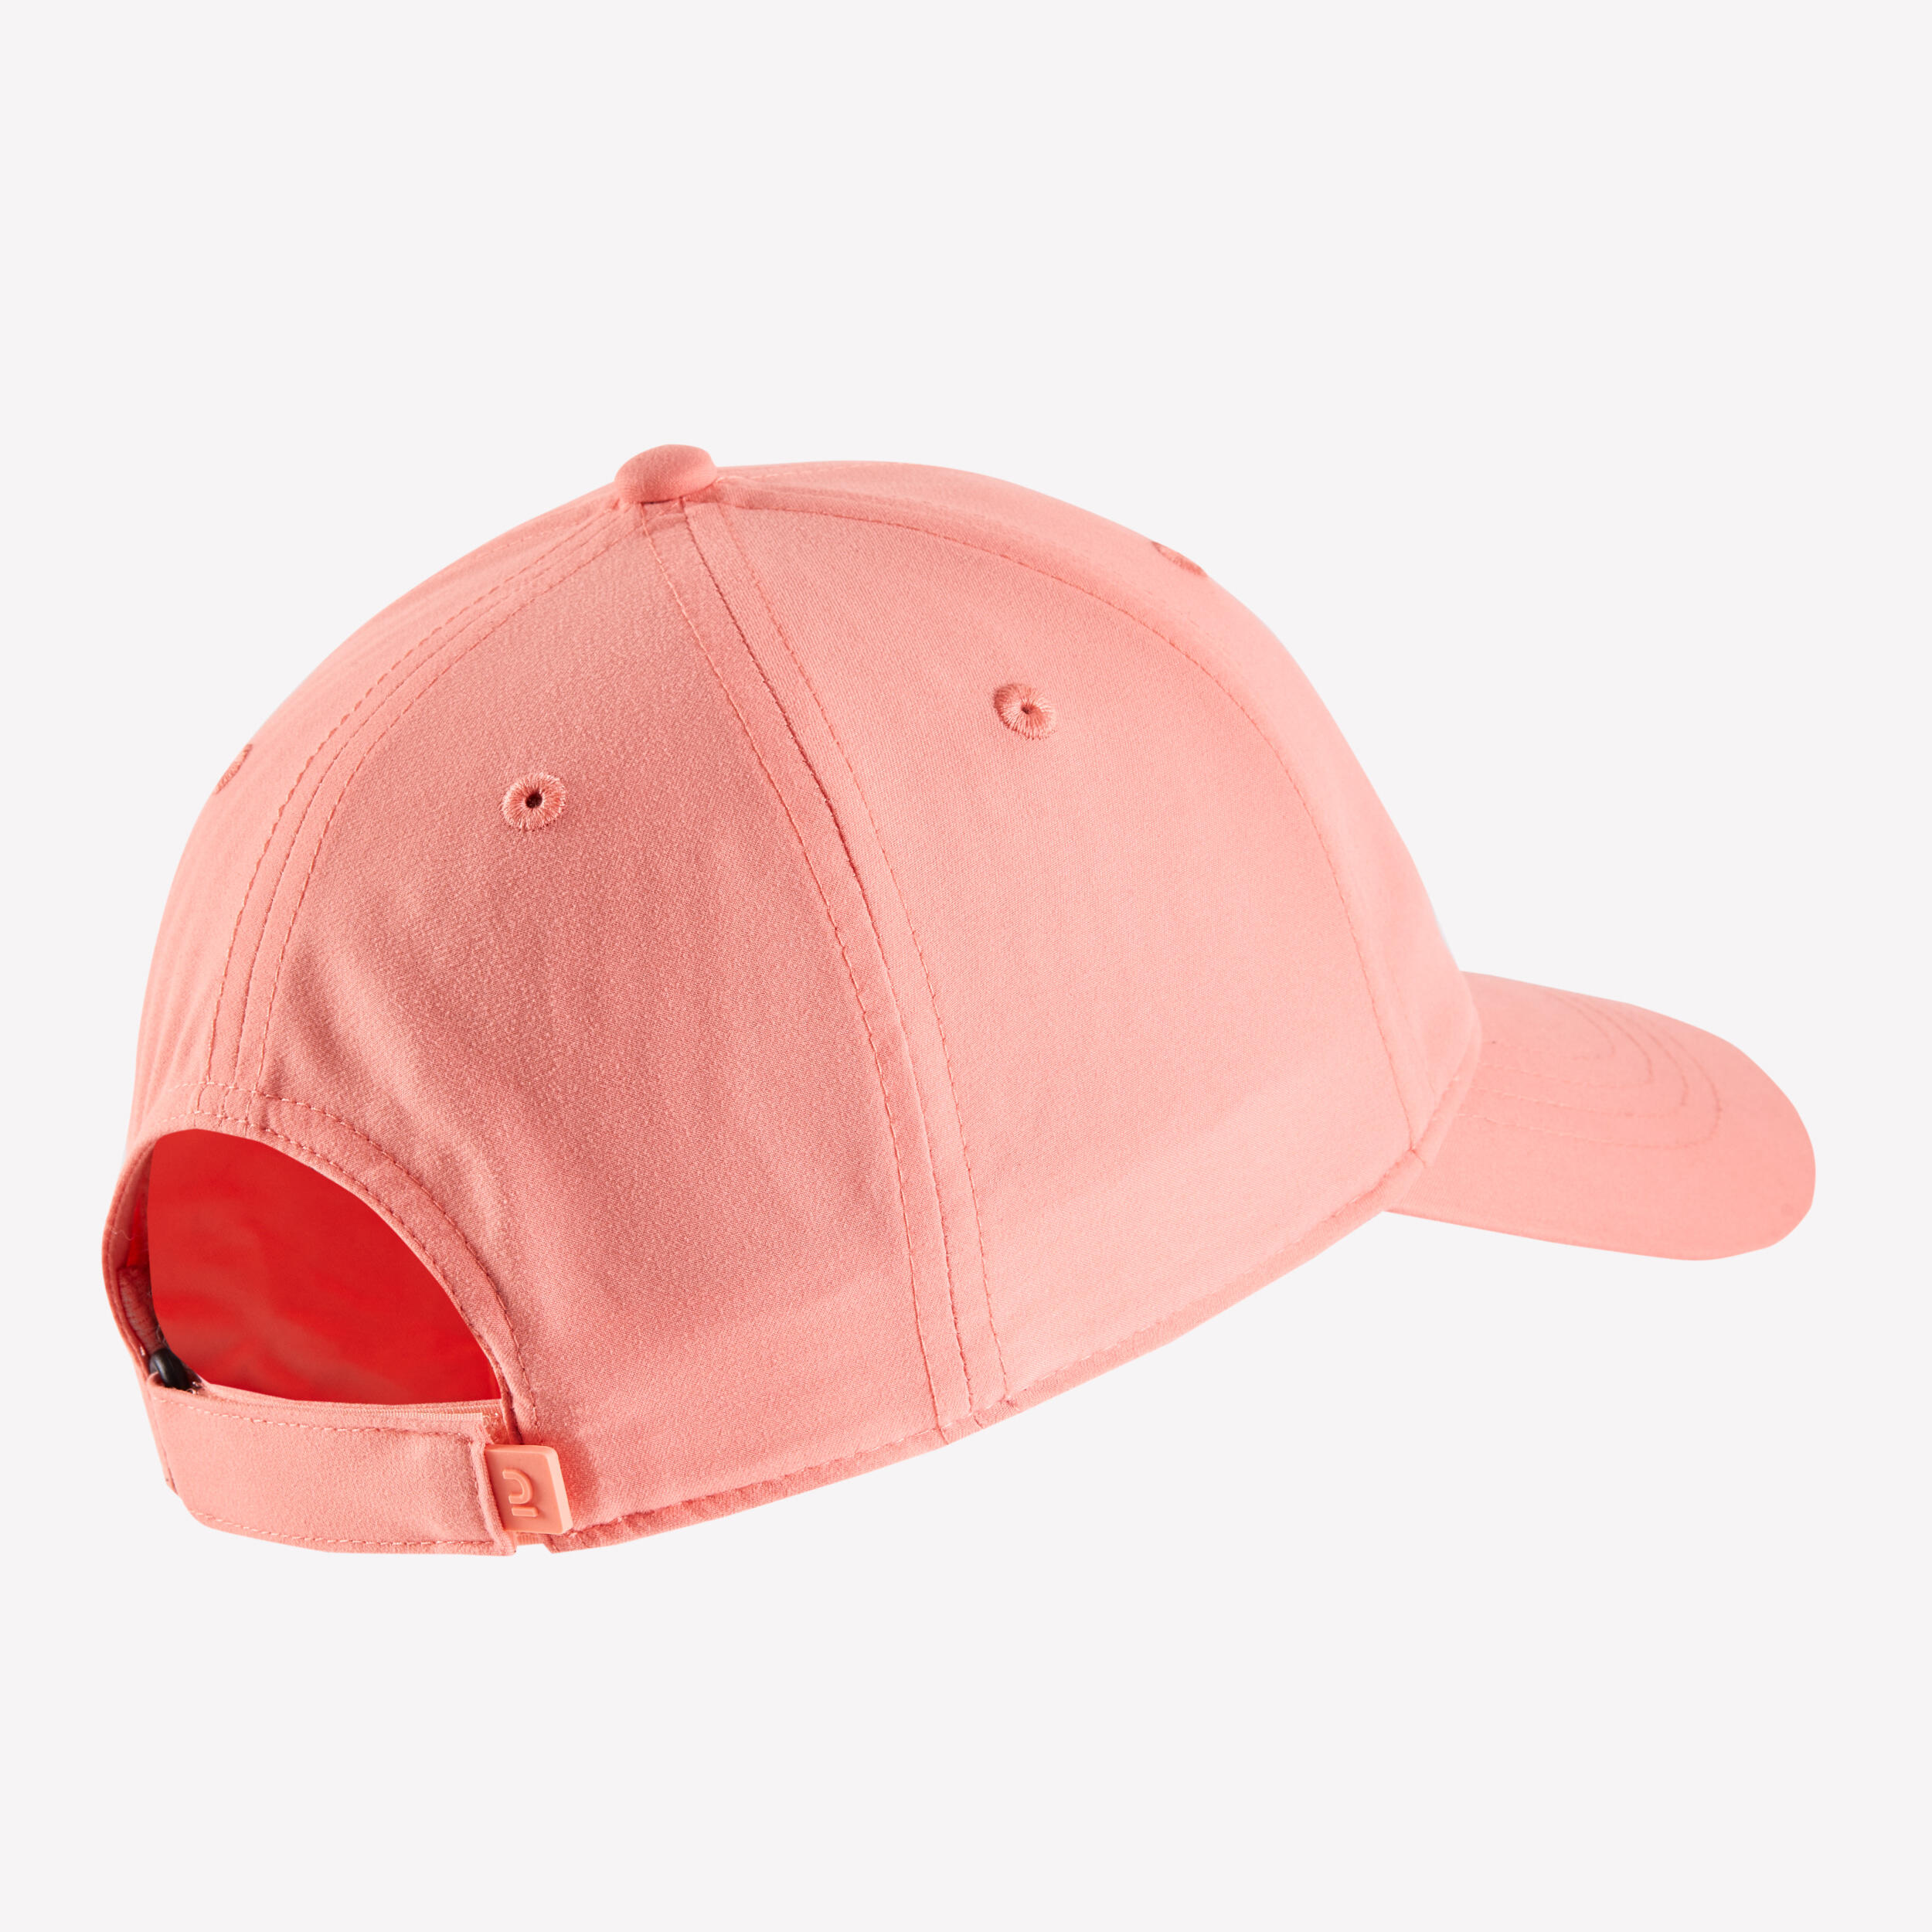 Tennis Cap Size 56 TC 500 - Pink/Black 4/4